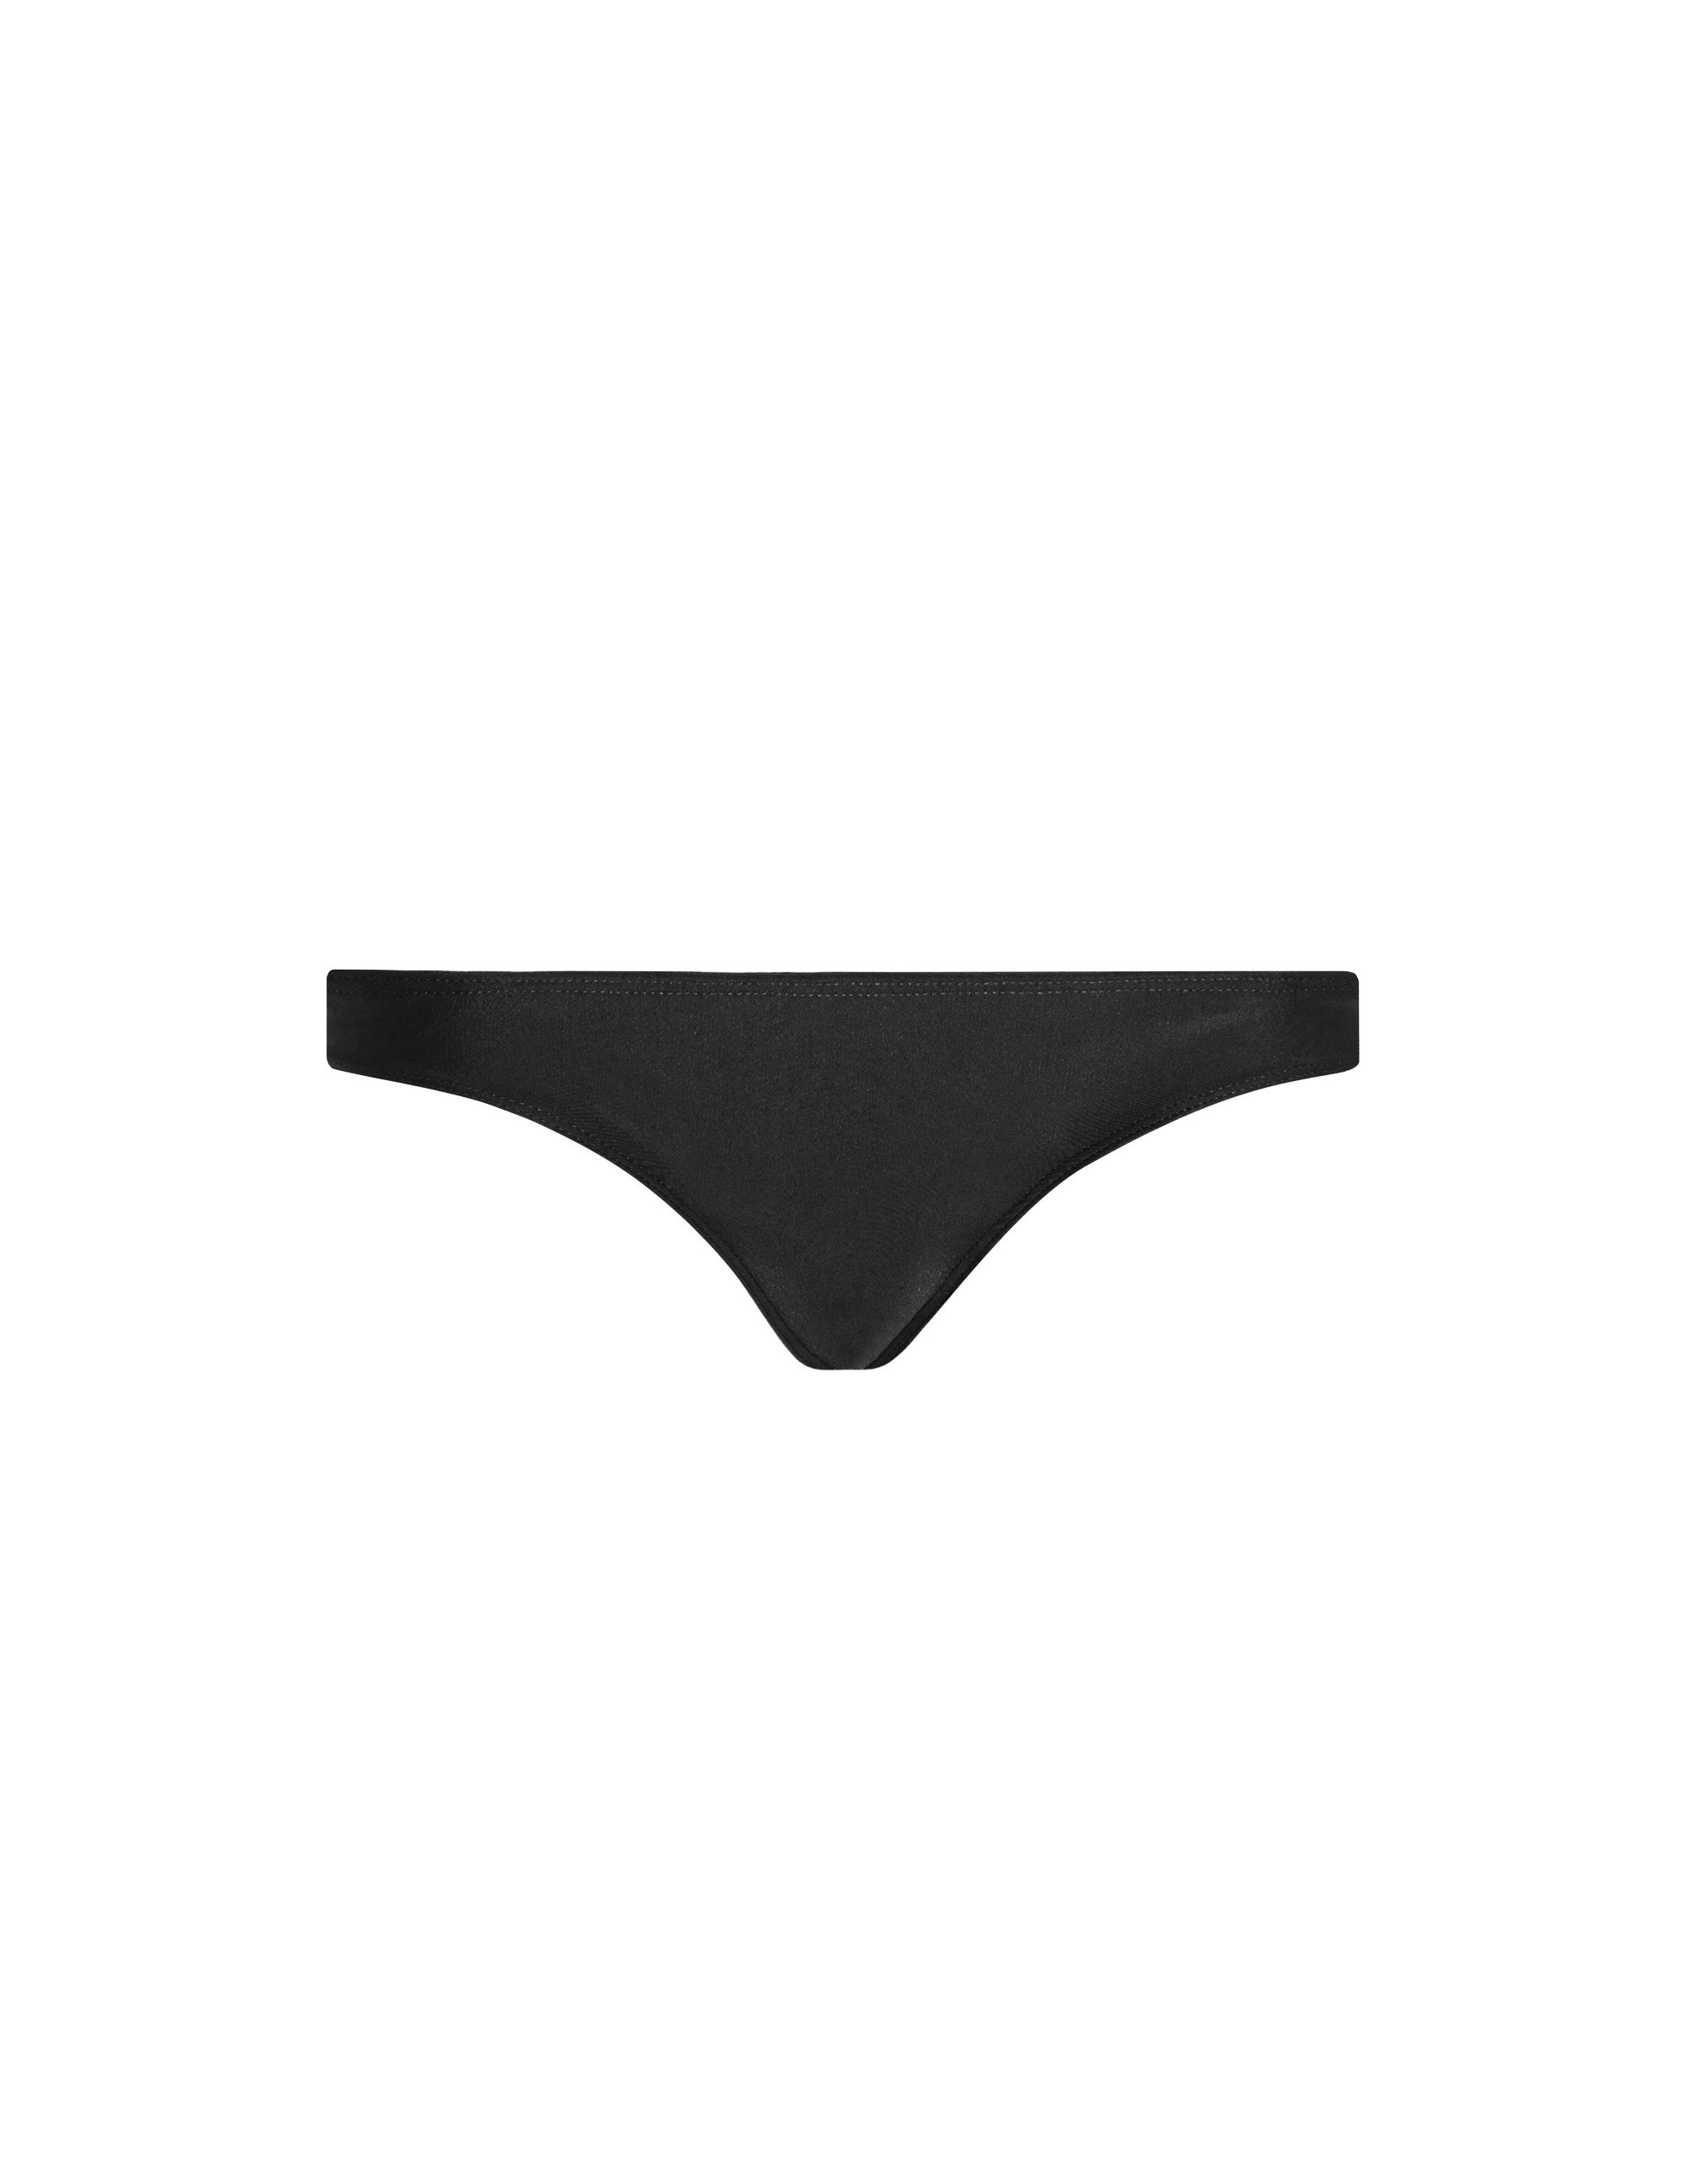 PARAISO bikini bottom - MATTE BLACK